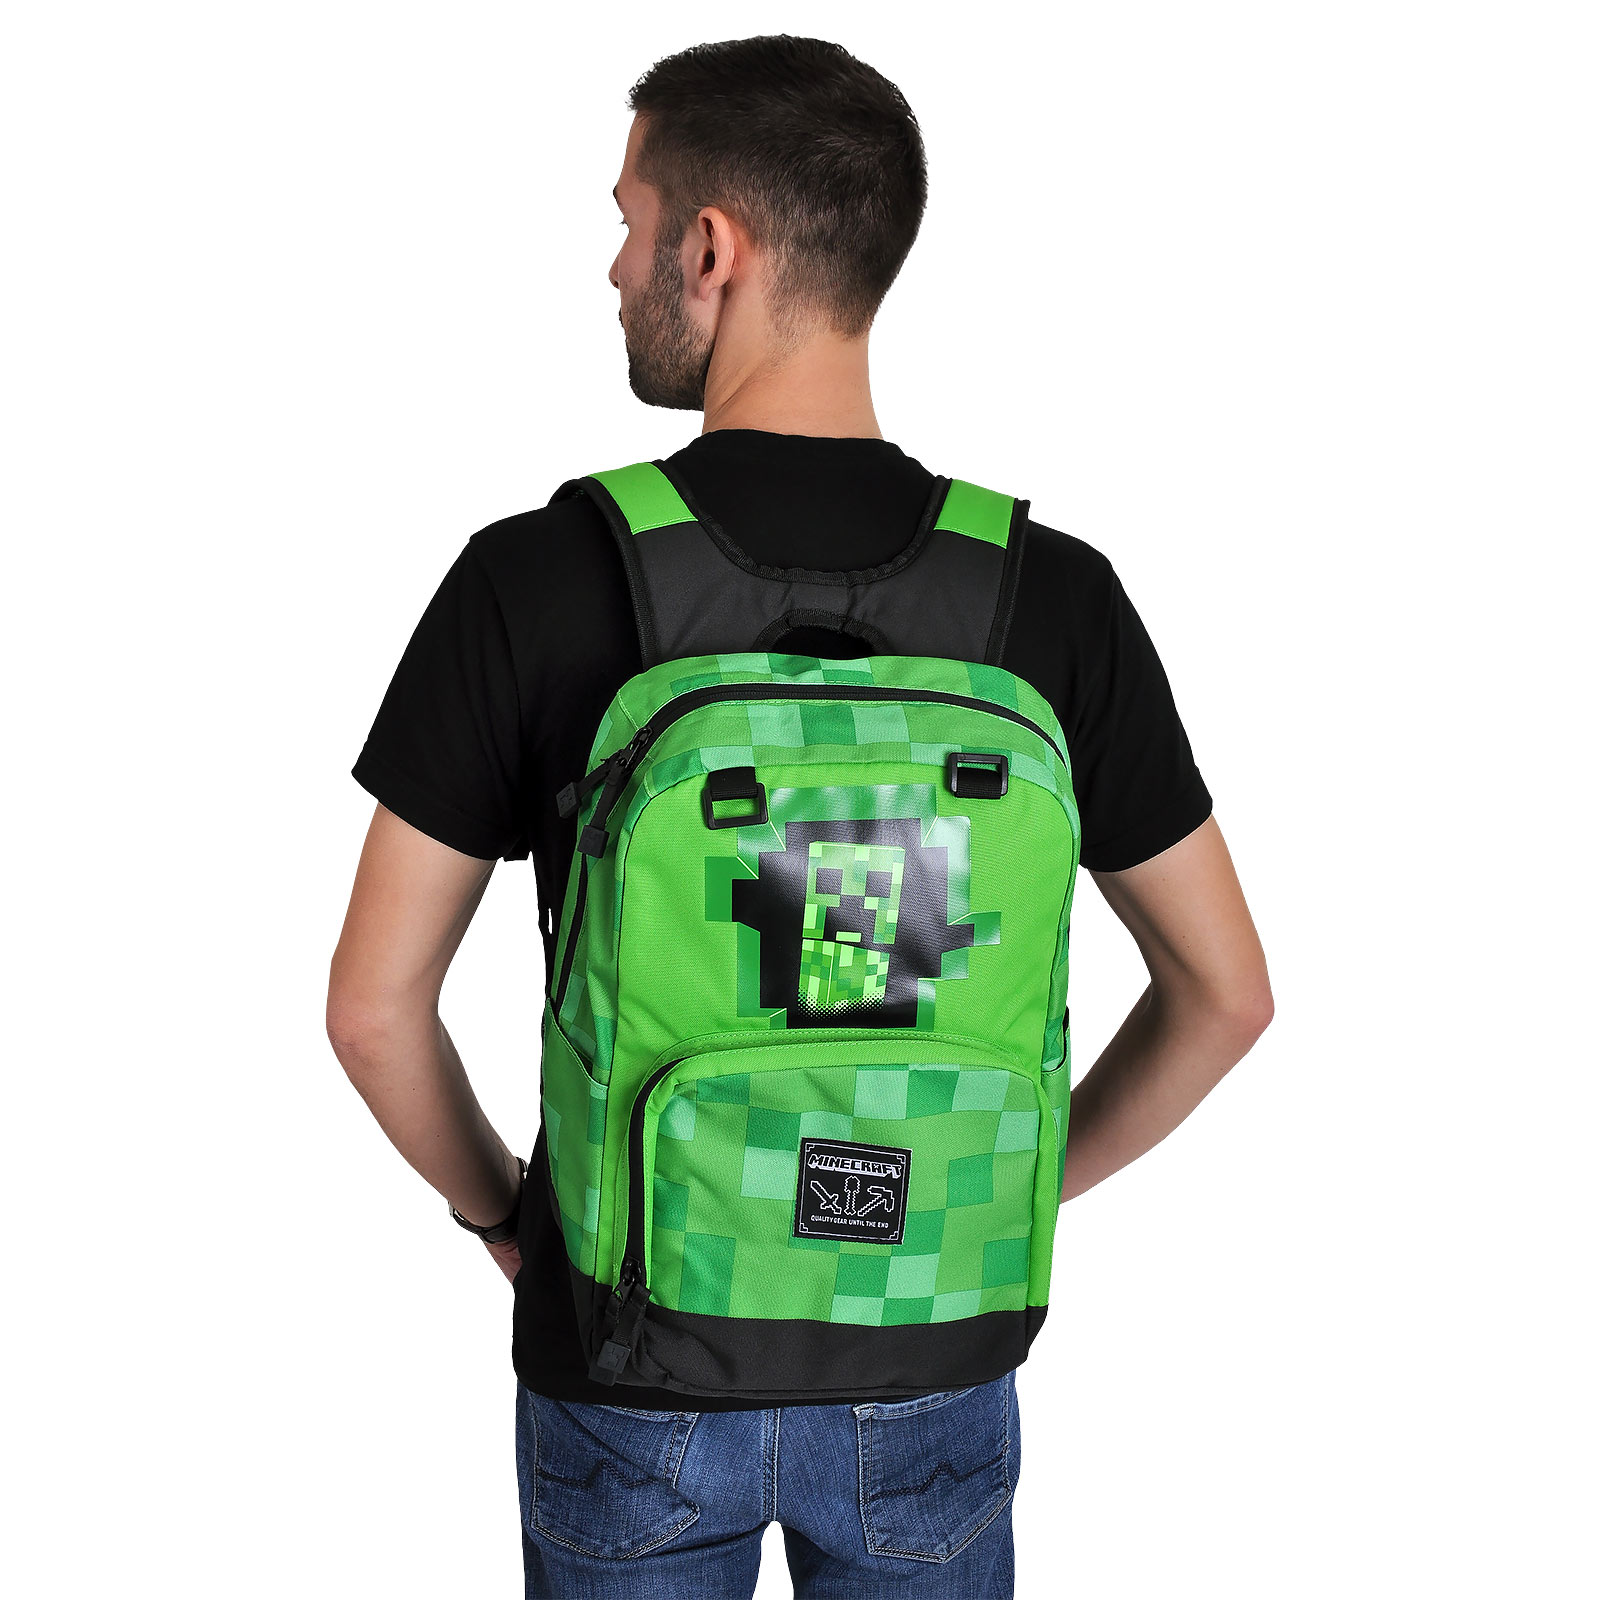 Minecraft - Creeper Inside sac à dos vert